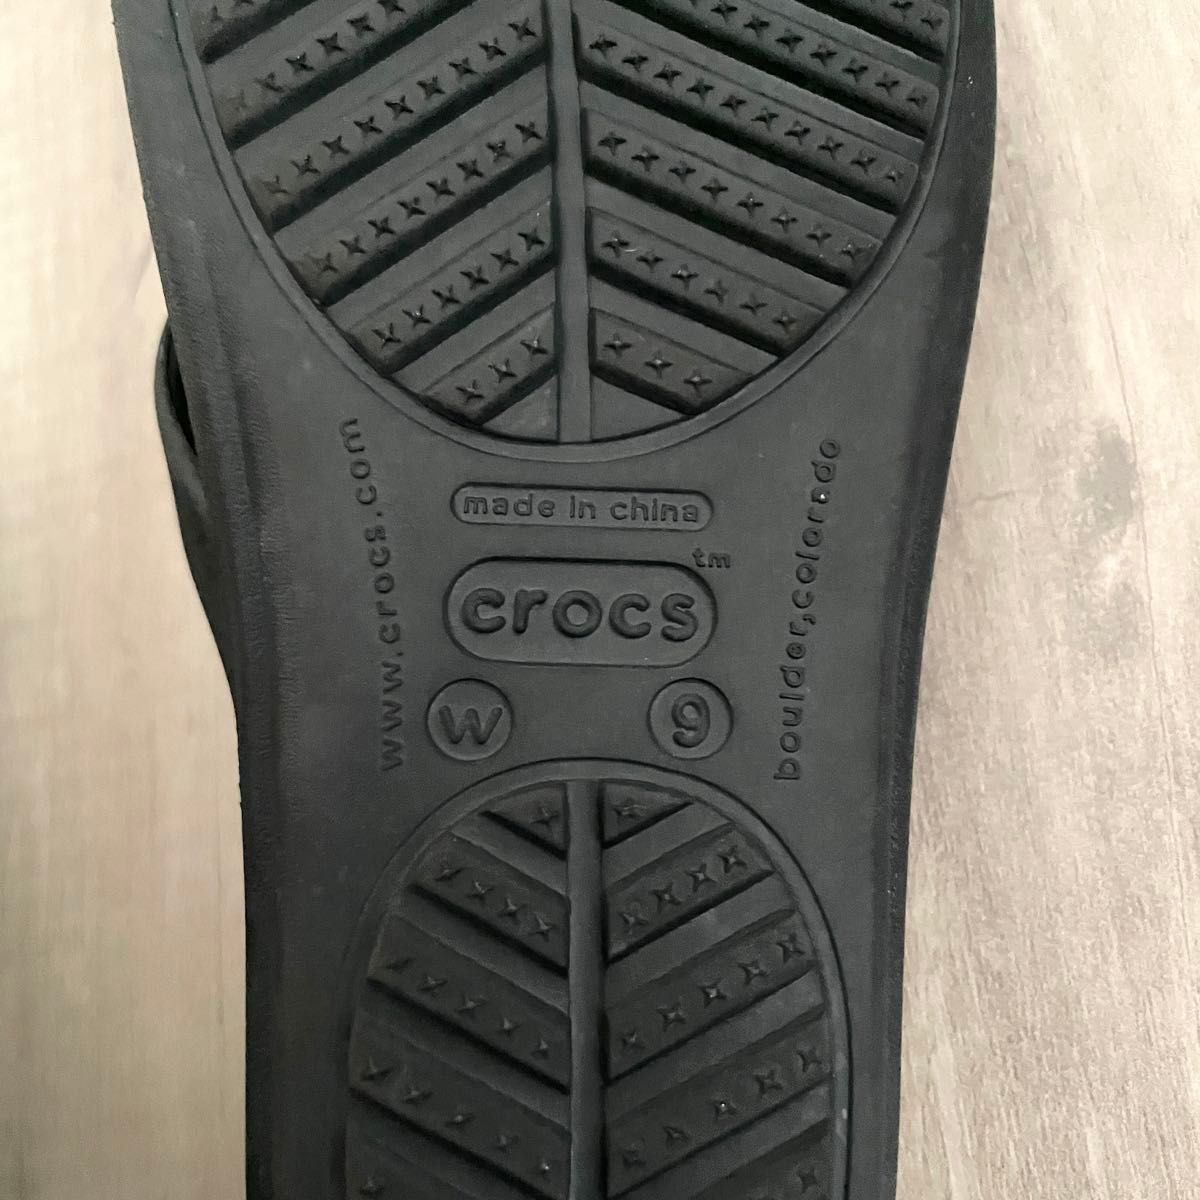 qtr様専用【crocs】 クロックス サンダル ミュール レディース 黒 ブラック 匿名配送 夏靴 25.0